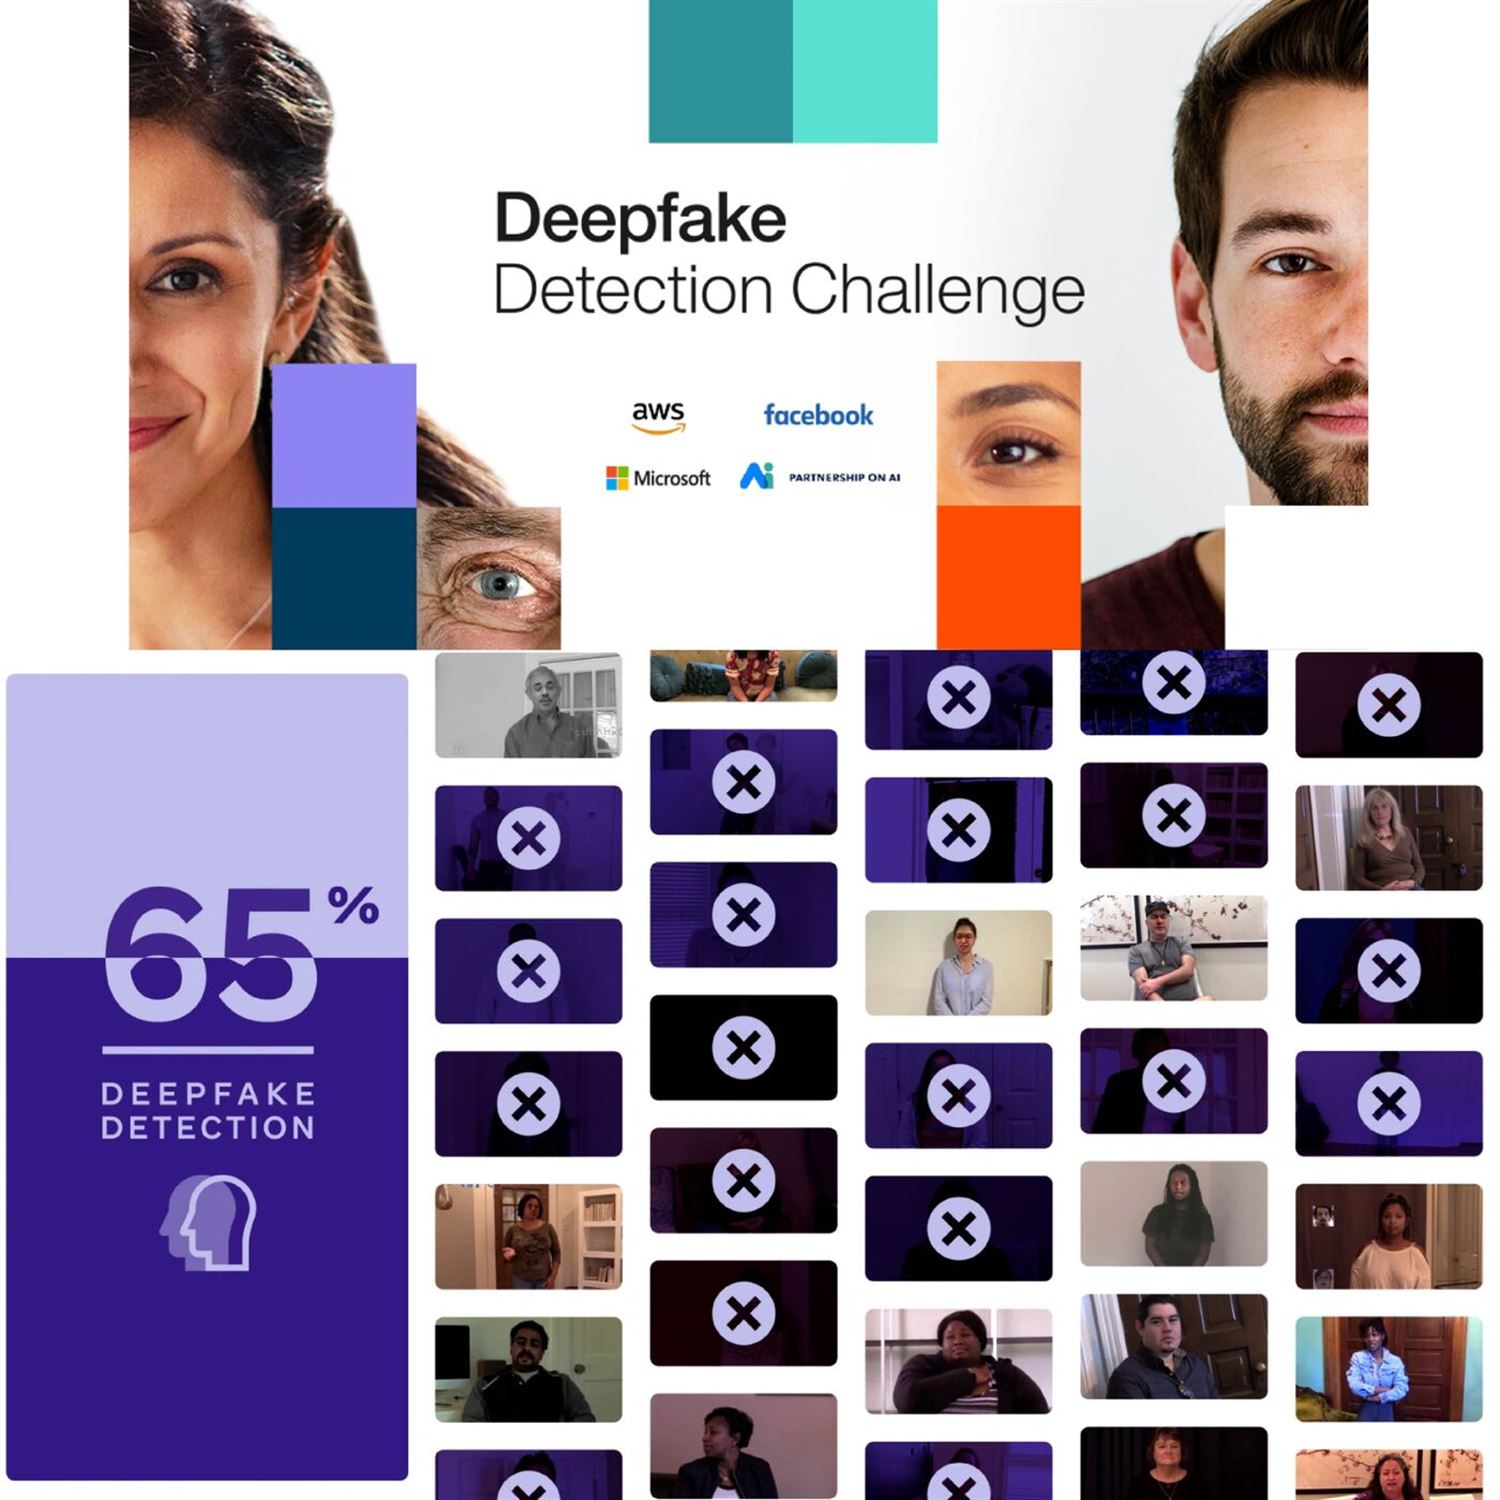 Facebook's deep fake detection challenge